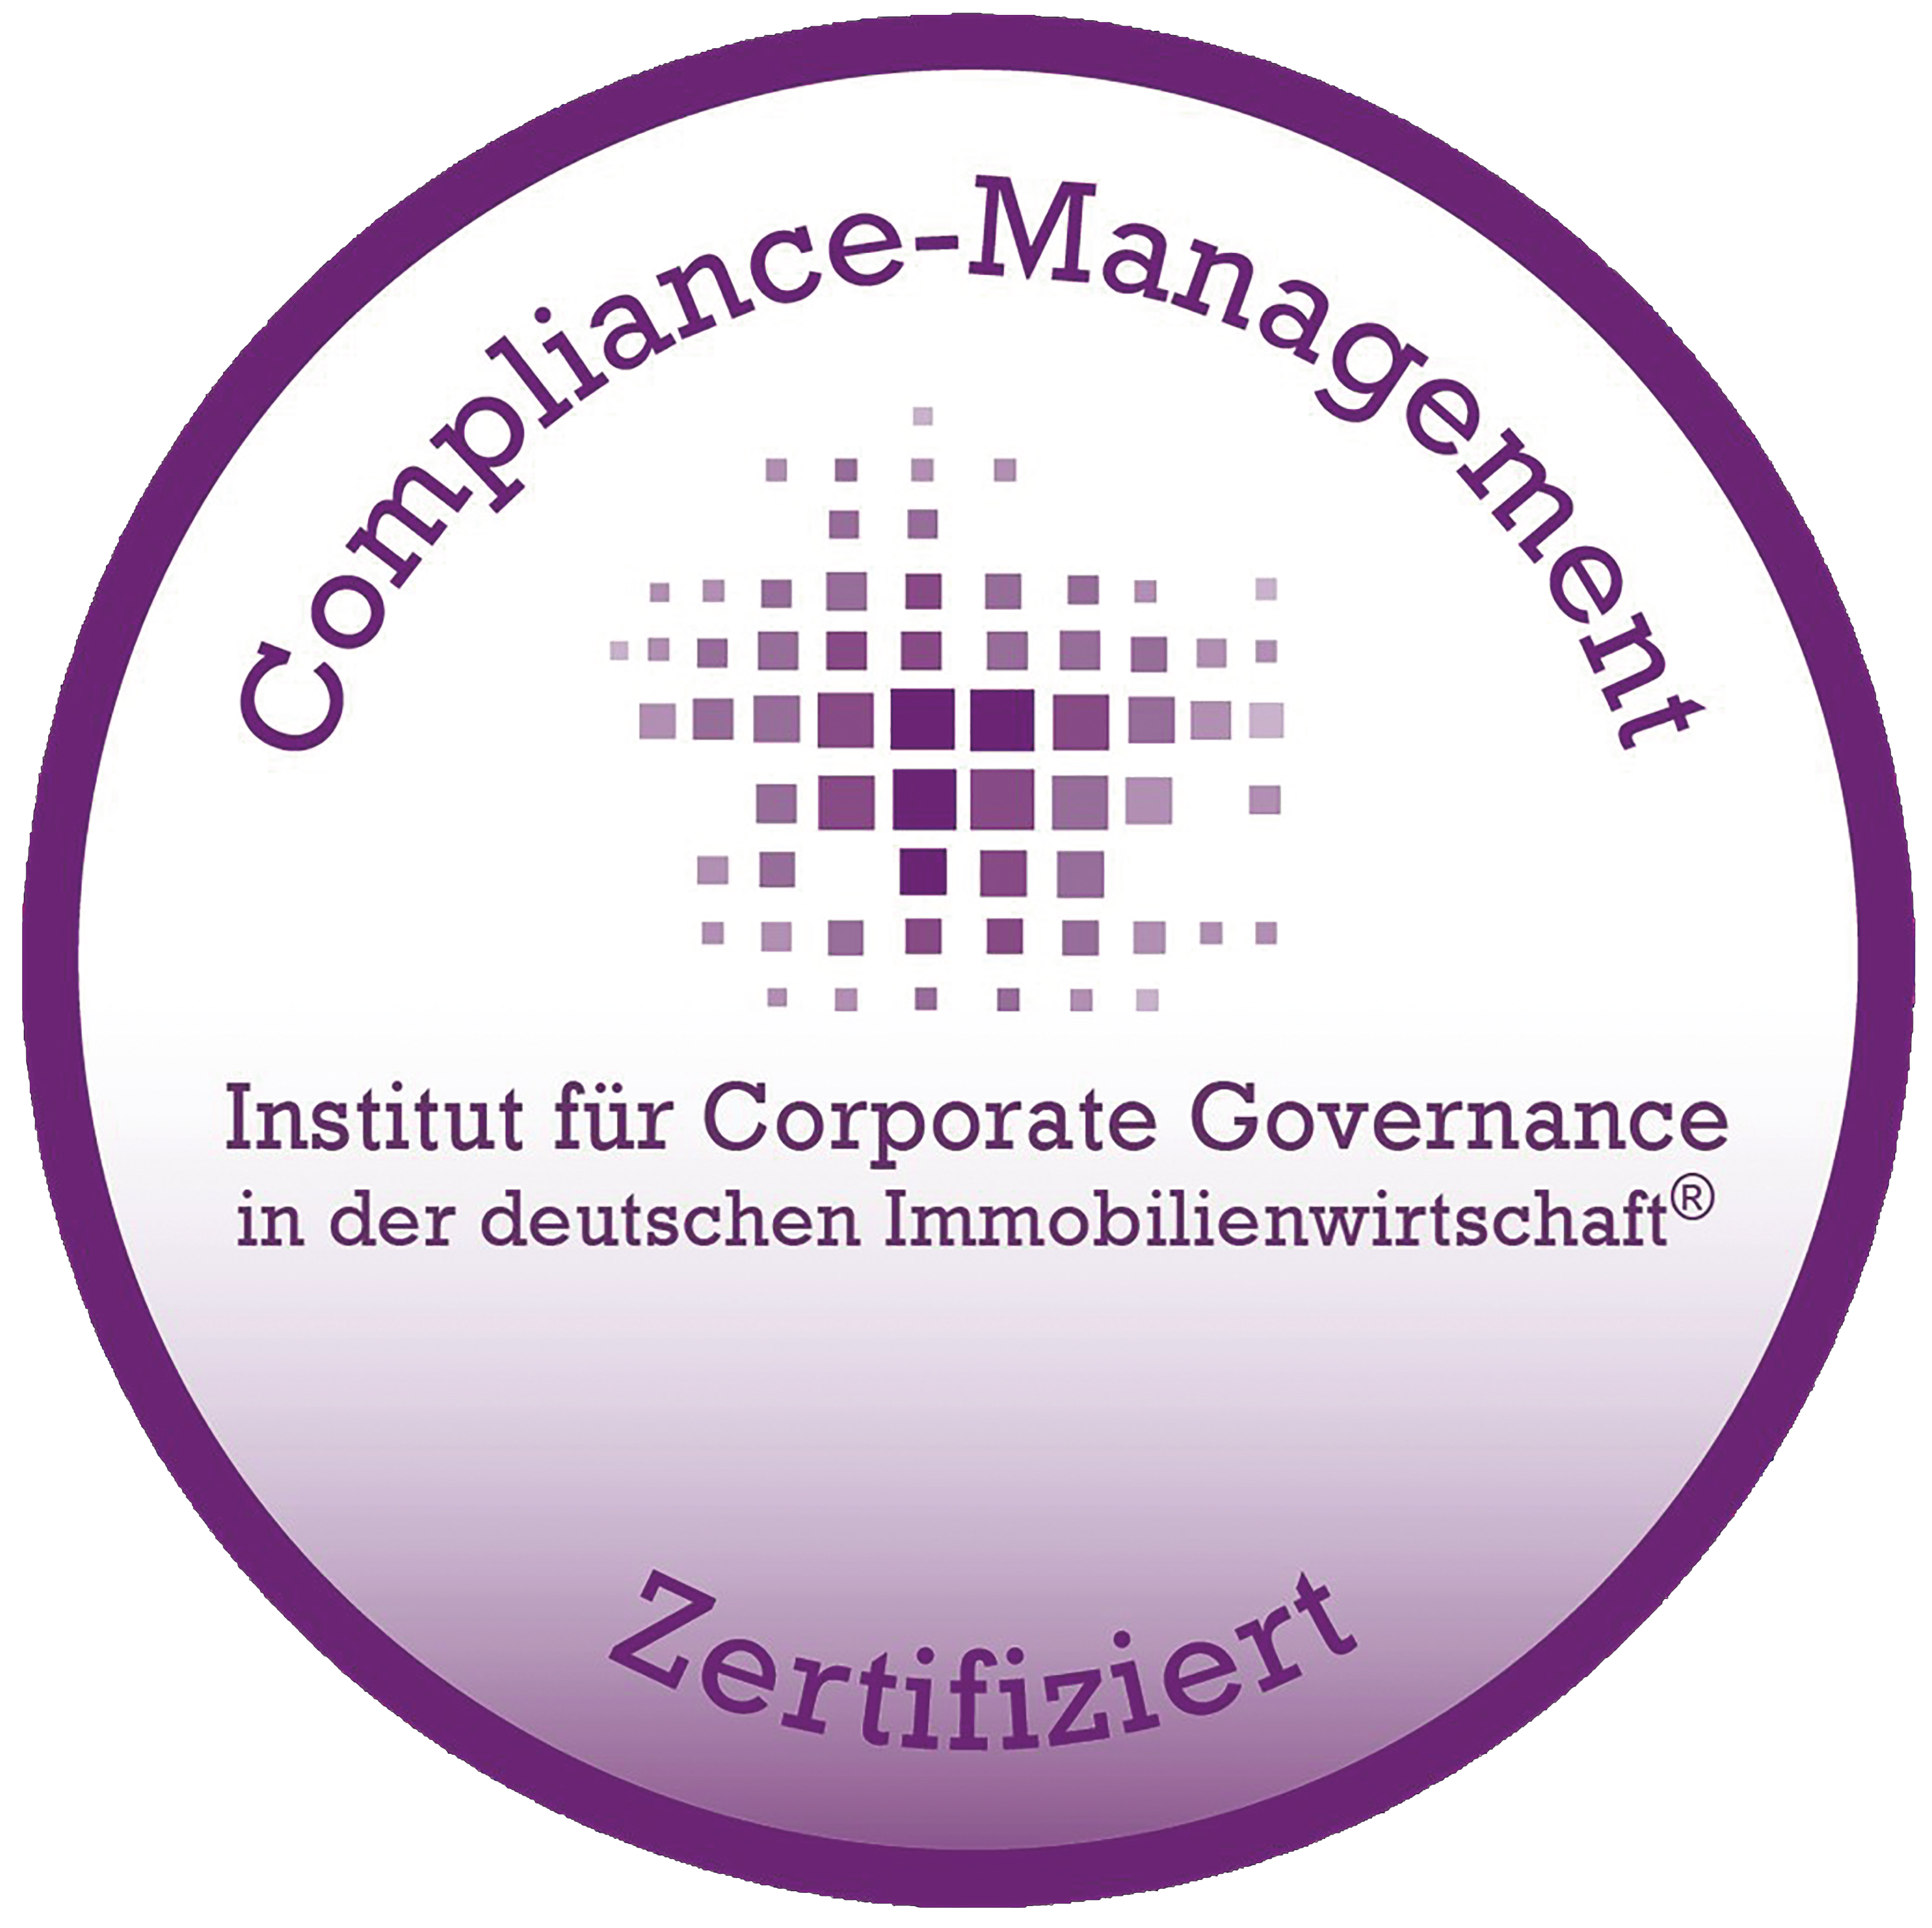 Testsiegel: Allianz Handwerker Services GmbH Compliance Management zertifiziert